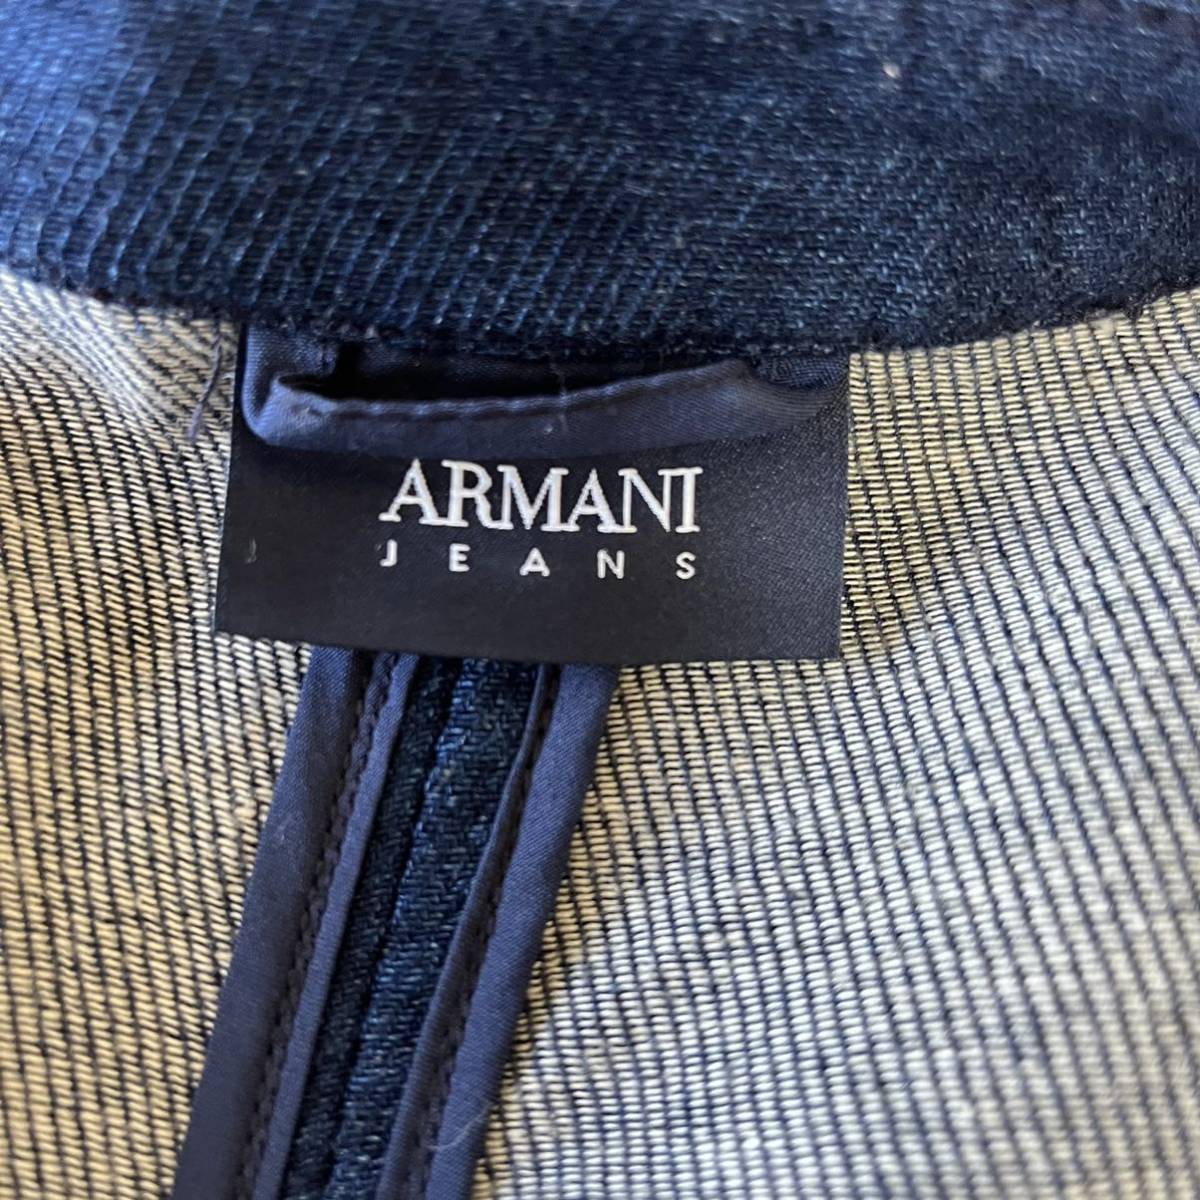 ARMANI JEANS【漢の風格】 アルマーニジーンズ デニムジャケット Gジャン ジップアップ ブルゾン インディゴブルー メンズ Mサイズ_画像6